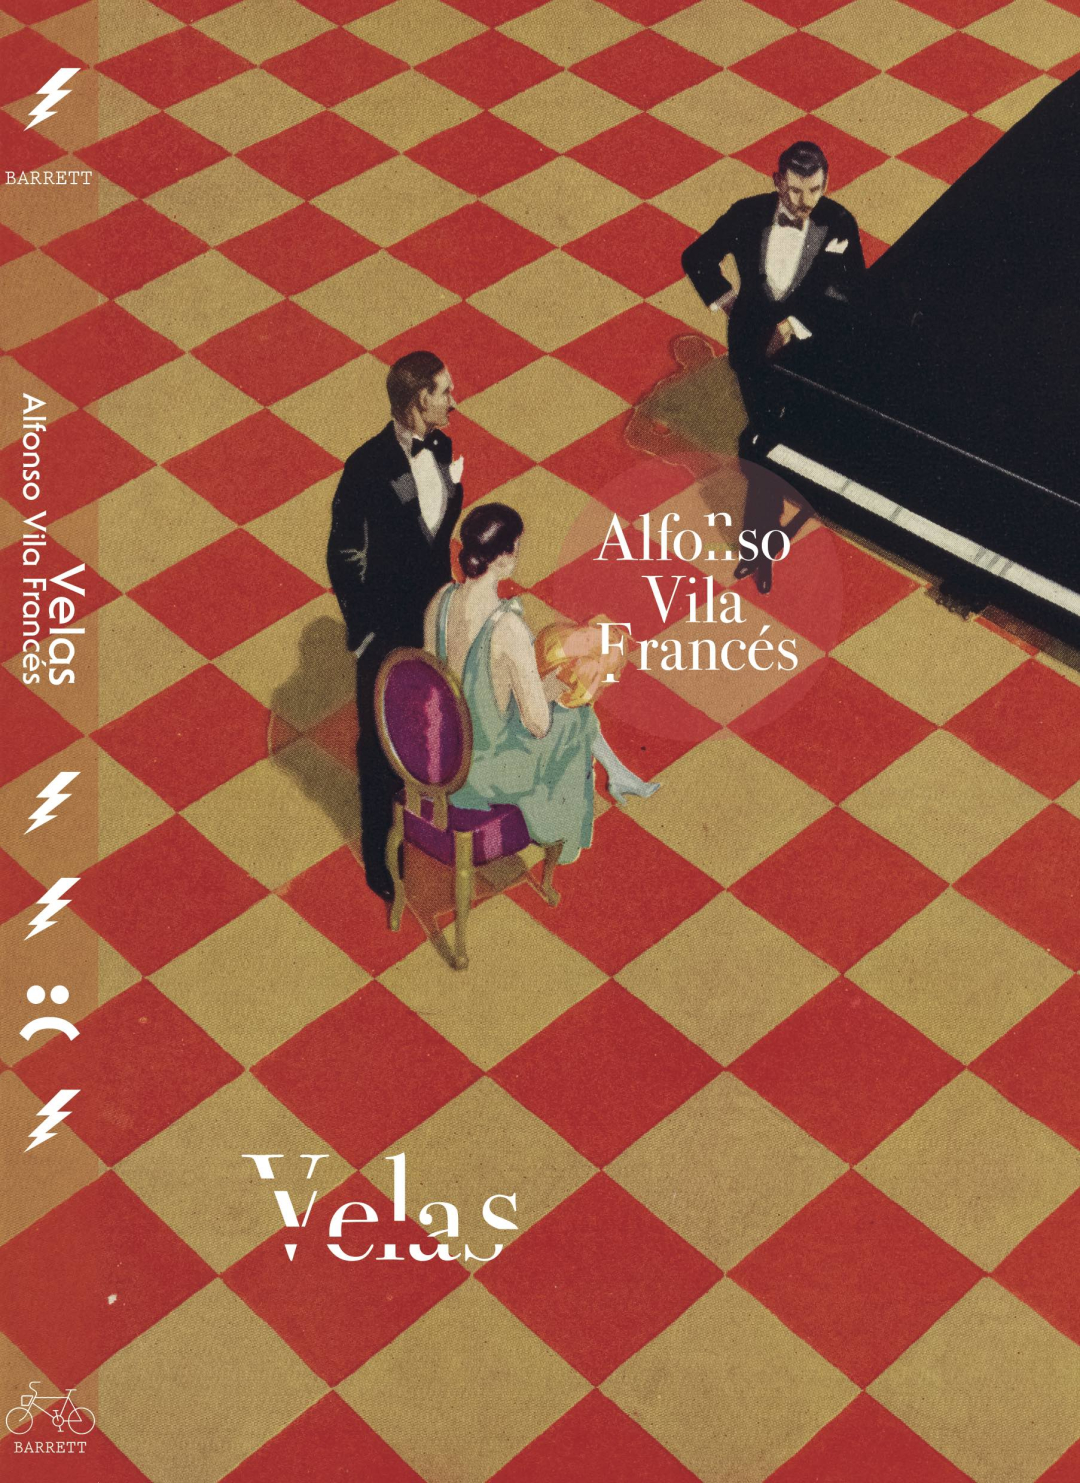 Velas una novela del valenciano Alfonso Vila